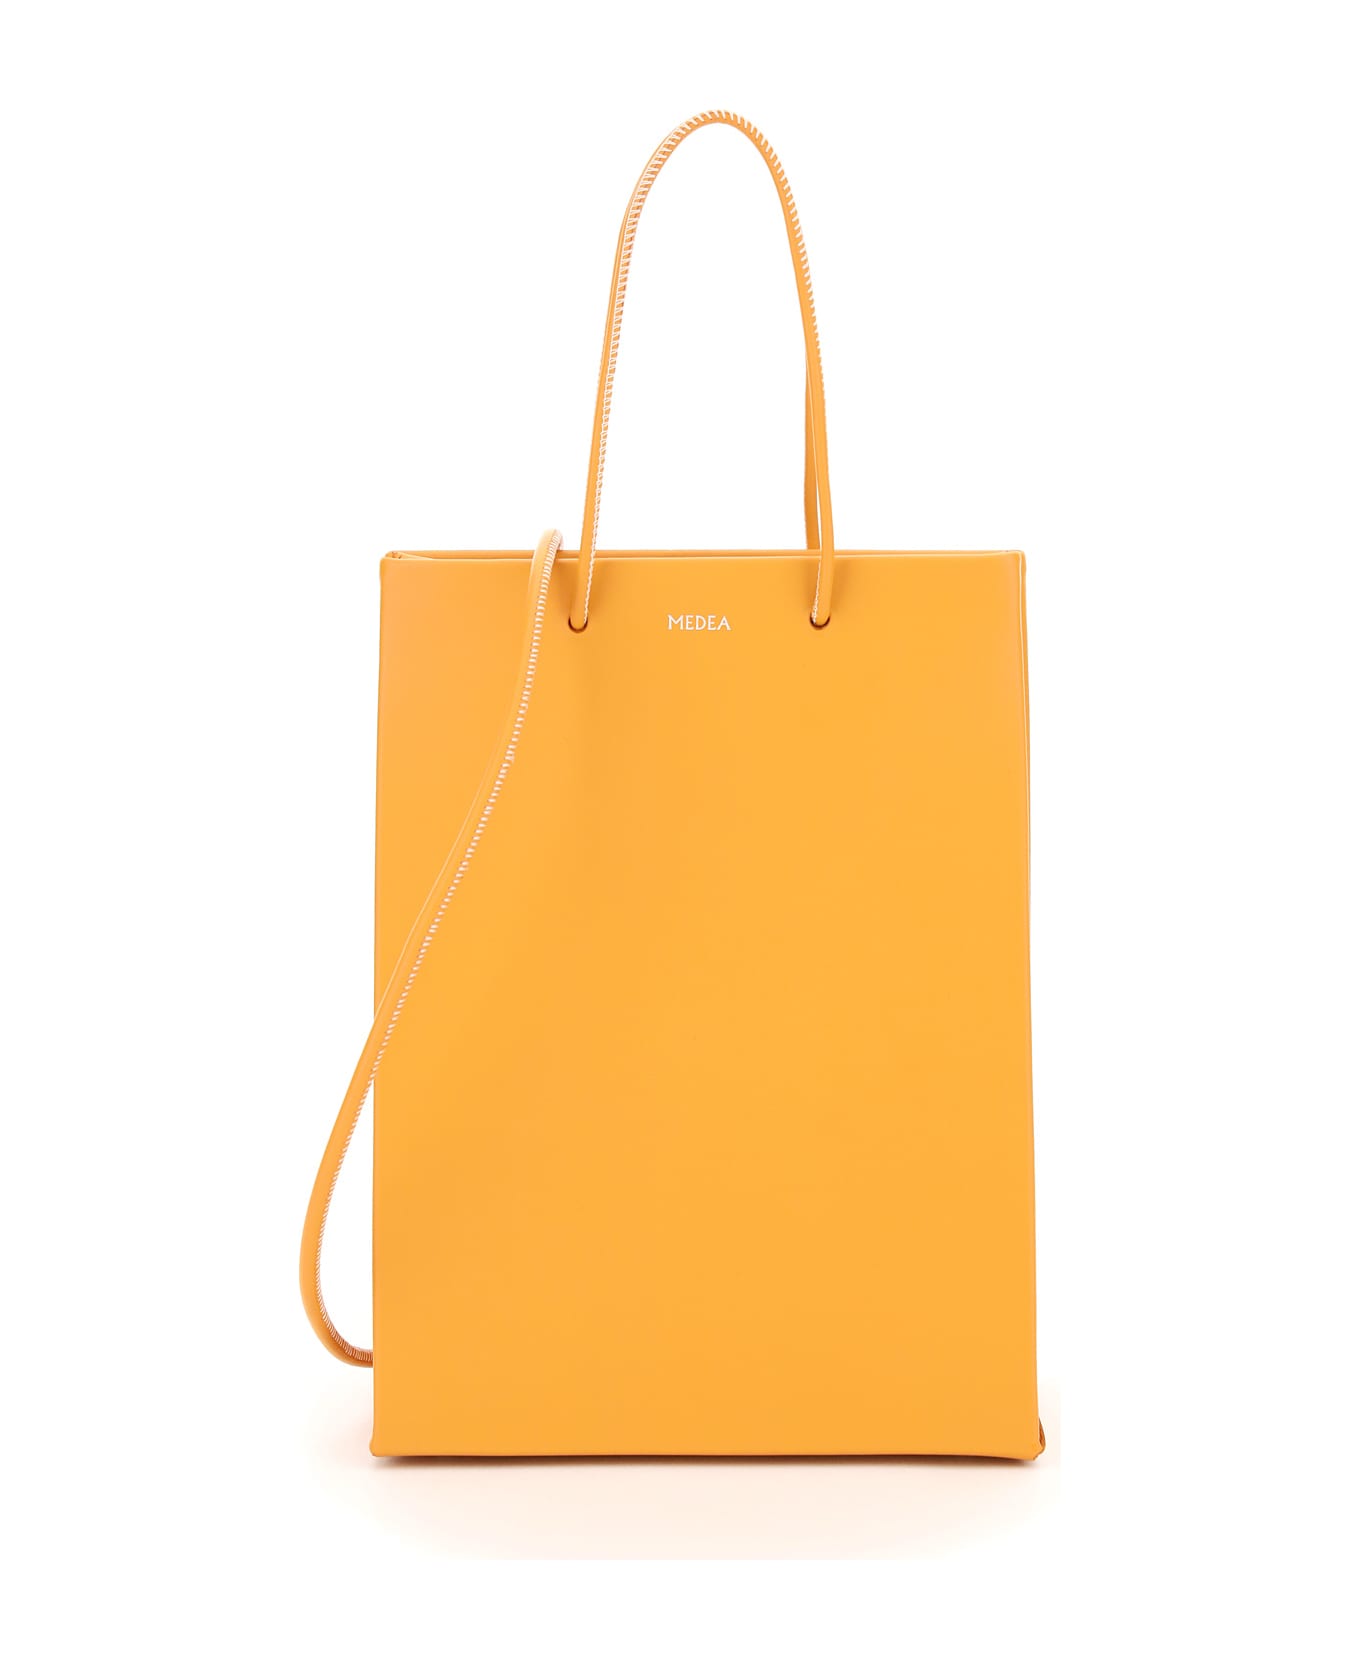 Medea Tall Prima Bag - TAN BROWN (Orange)